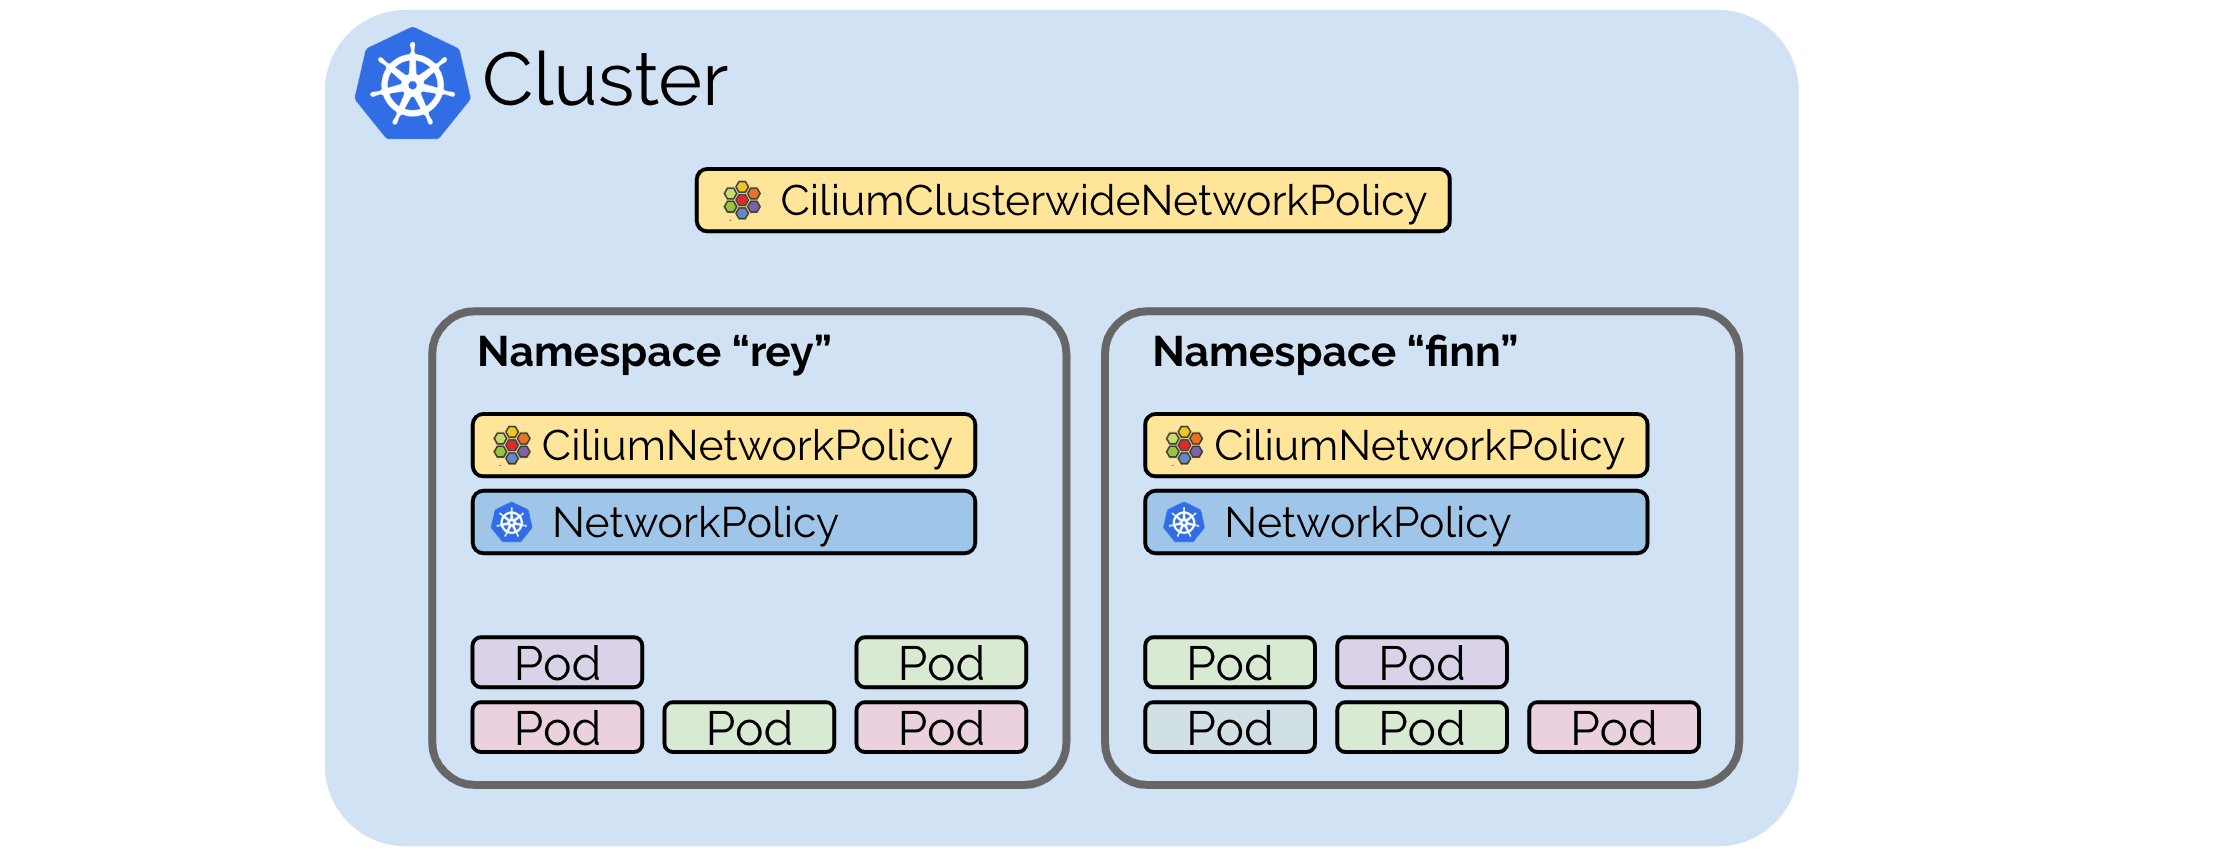 Cilium network policy editor UI